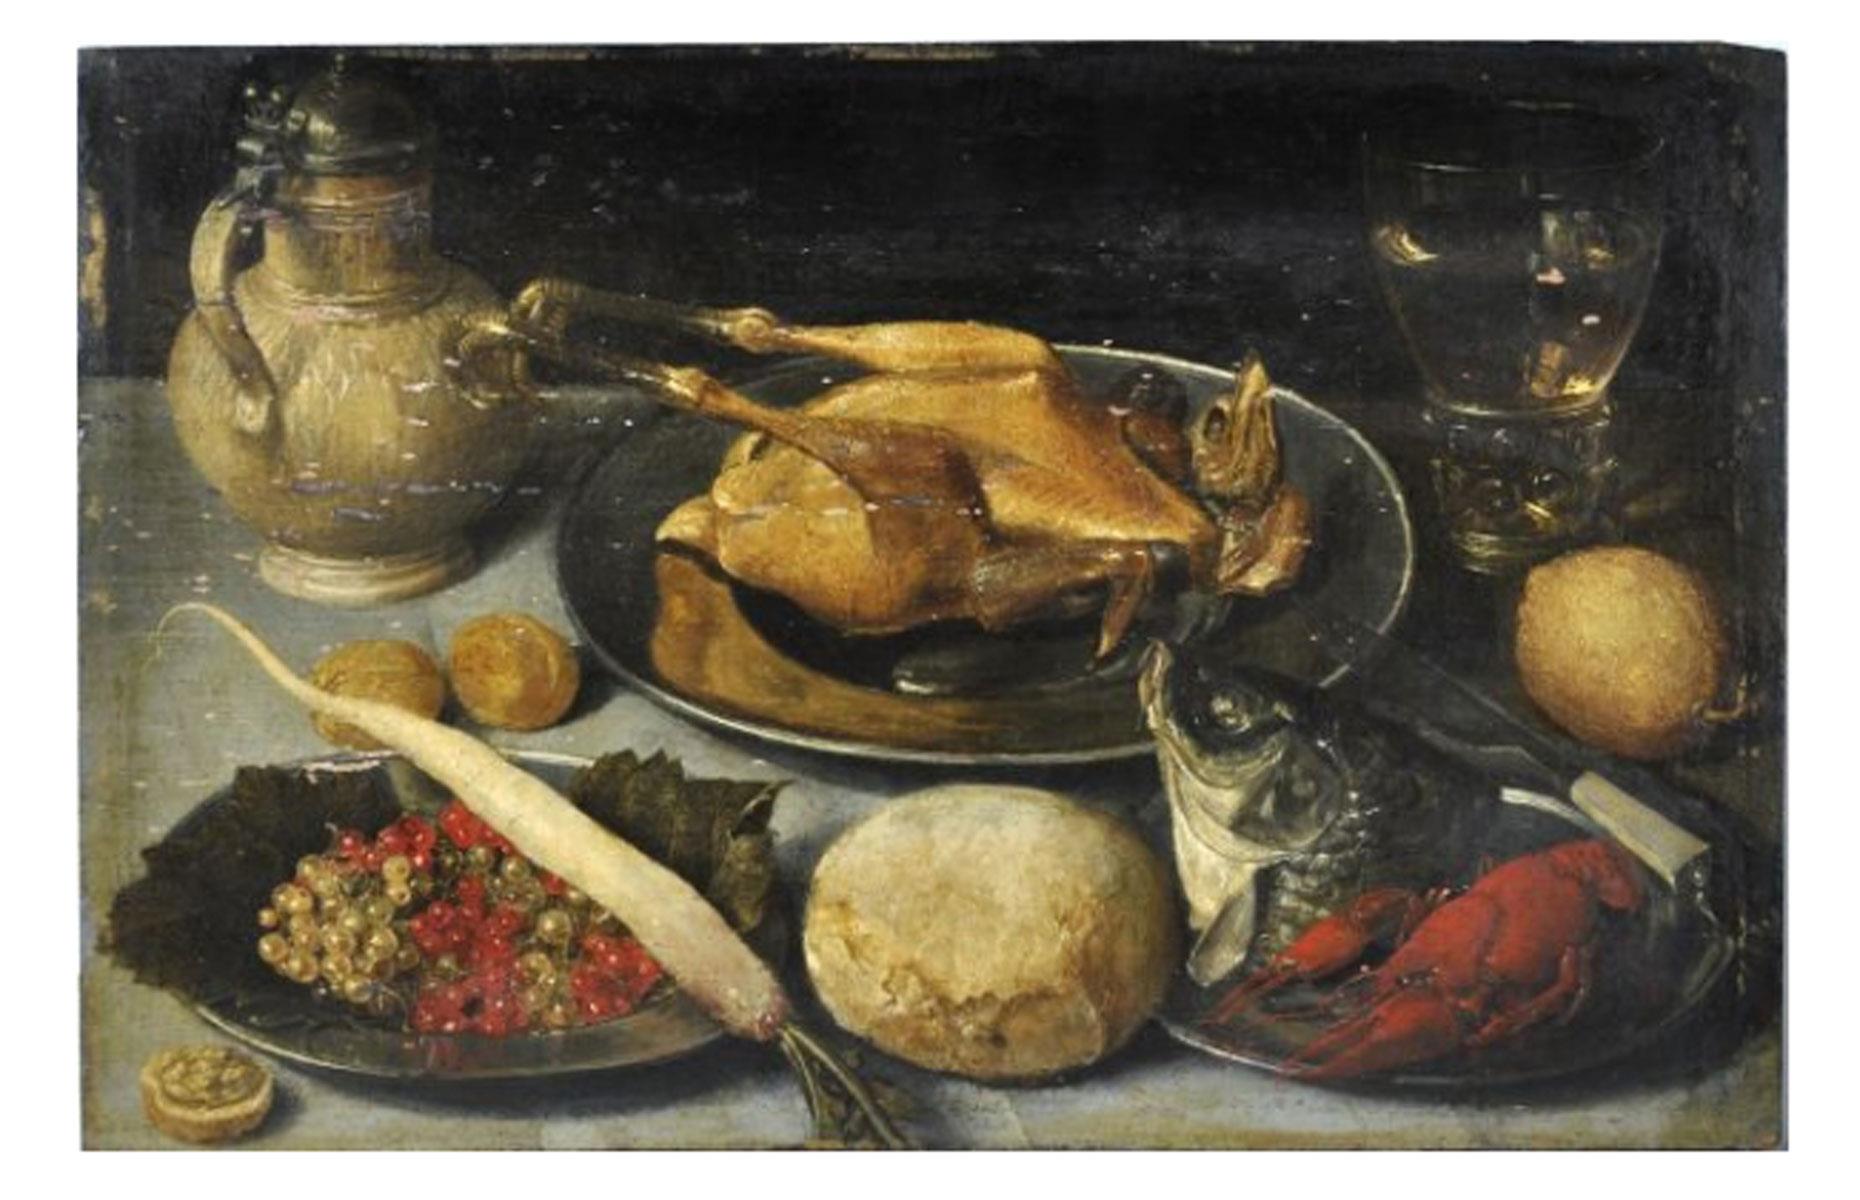 The 17th-century Flemish painting